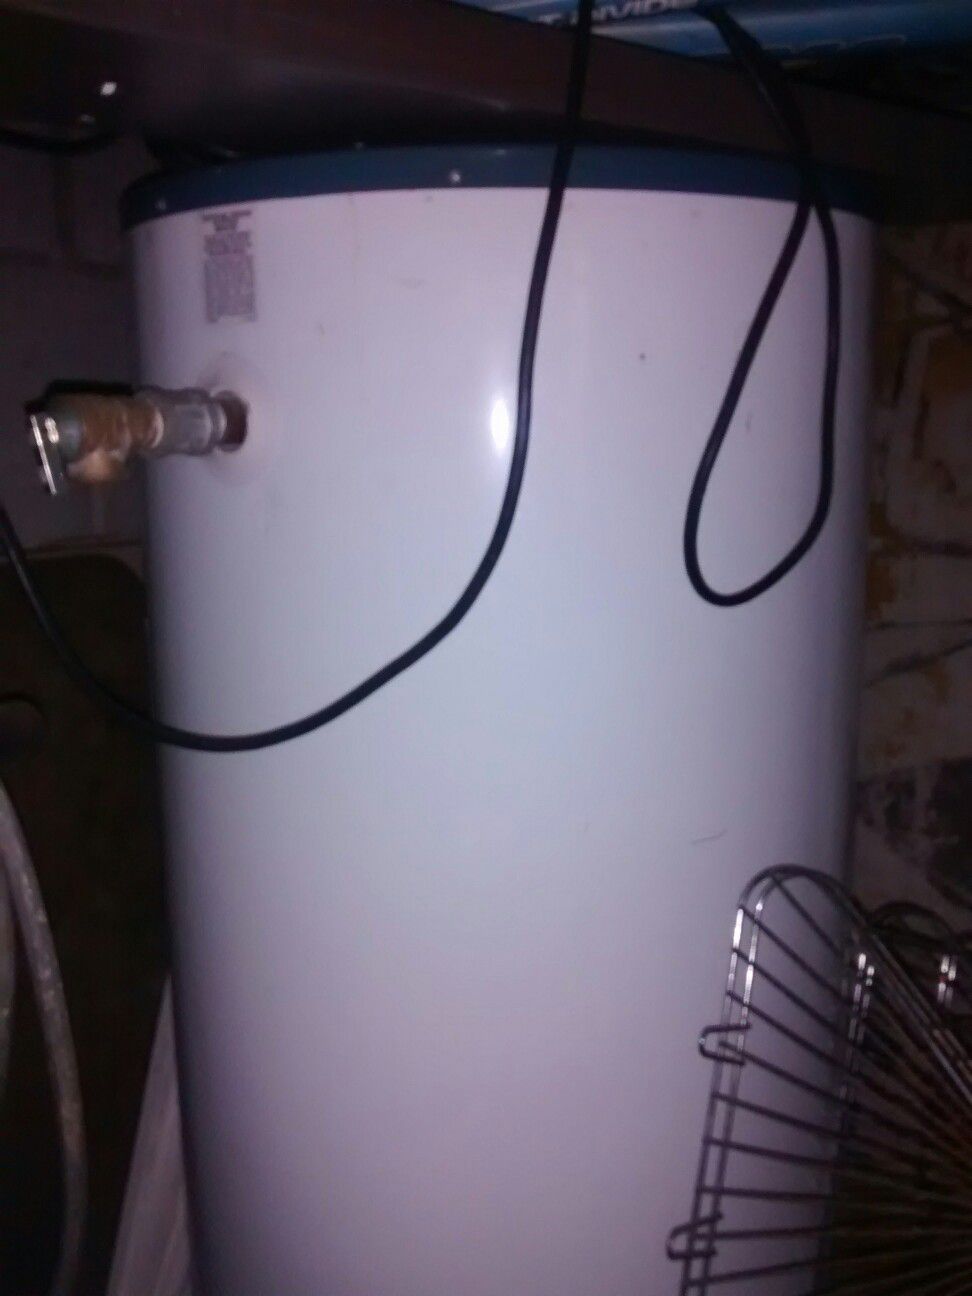 Rudd Hot water heater